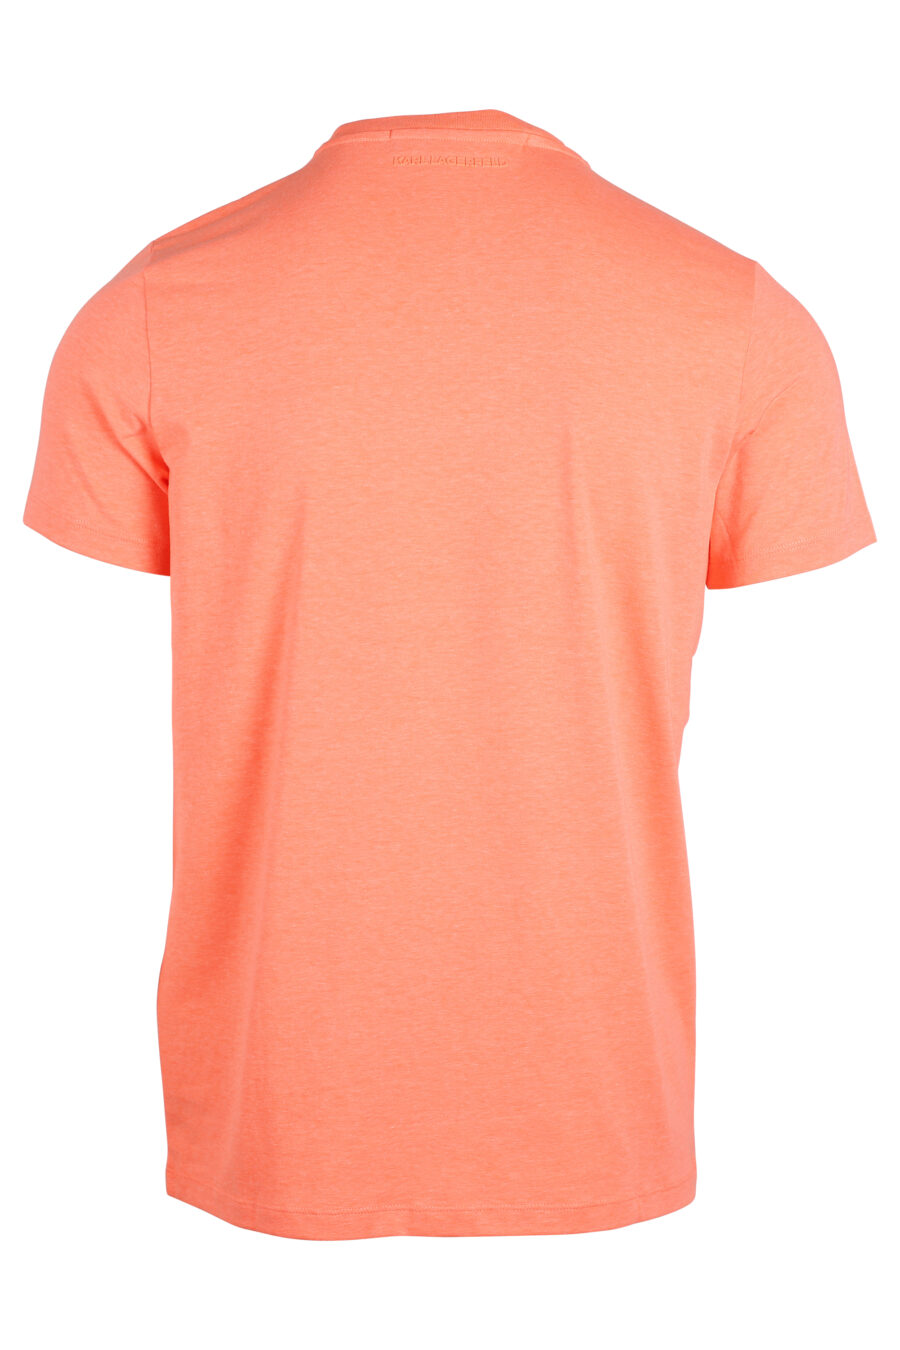 Camiseta naranja con maxilogo "rue st guillaume" negro y naranja - IMG 4737